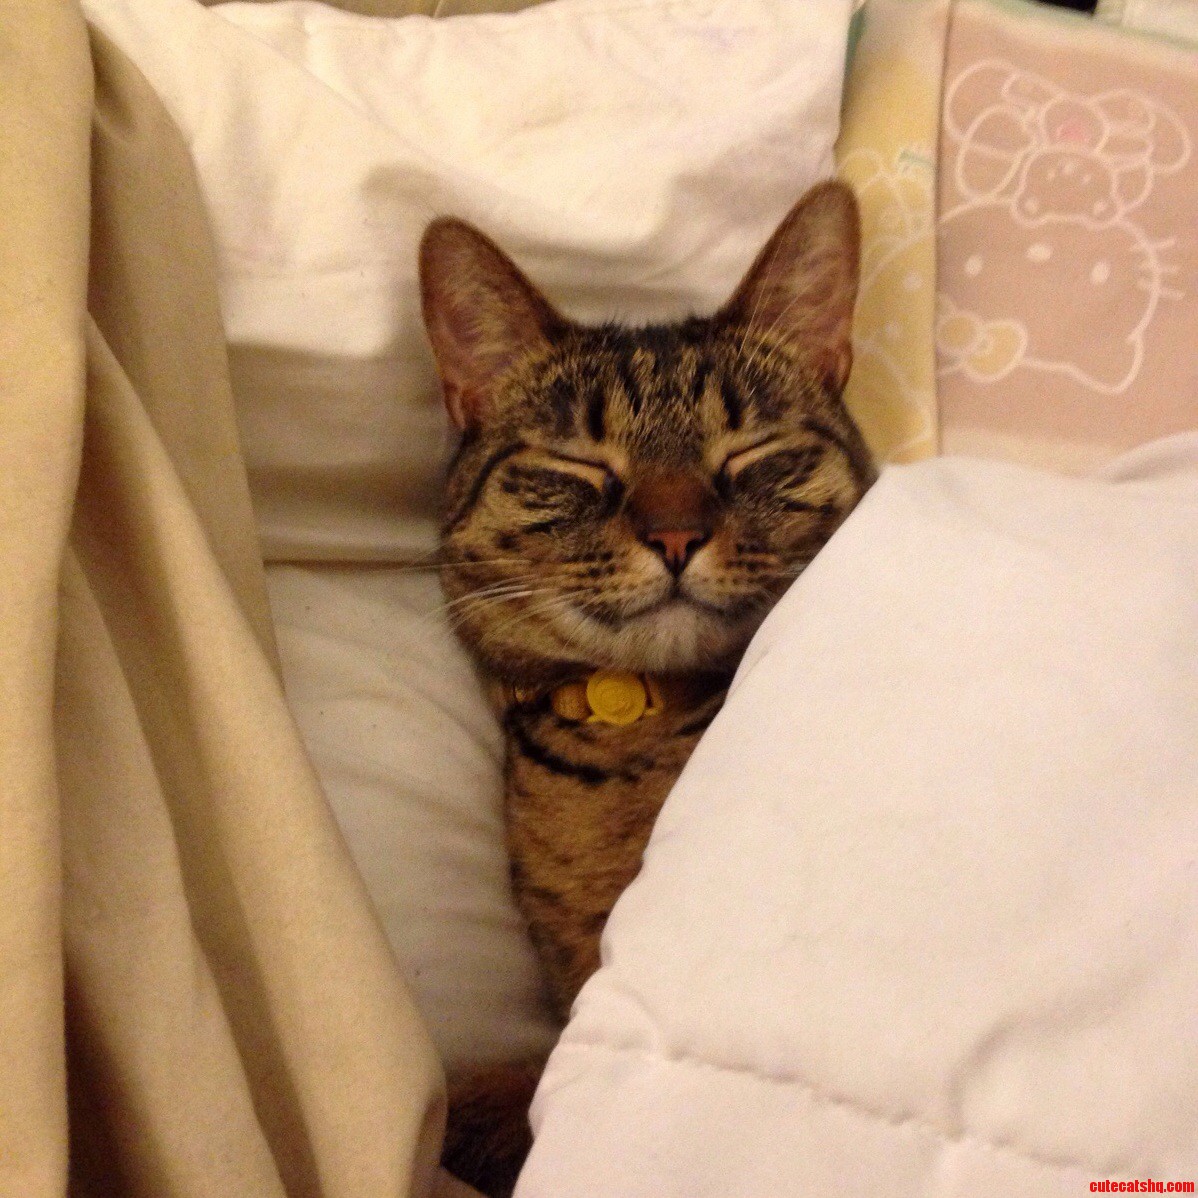 Oliver my half bengal half tabby terror cuddling in my sheets